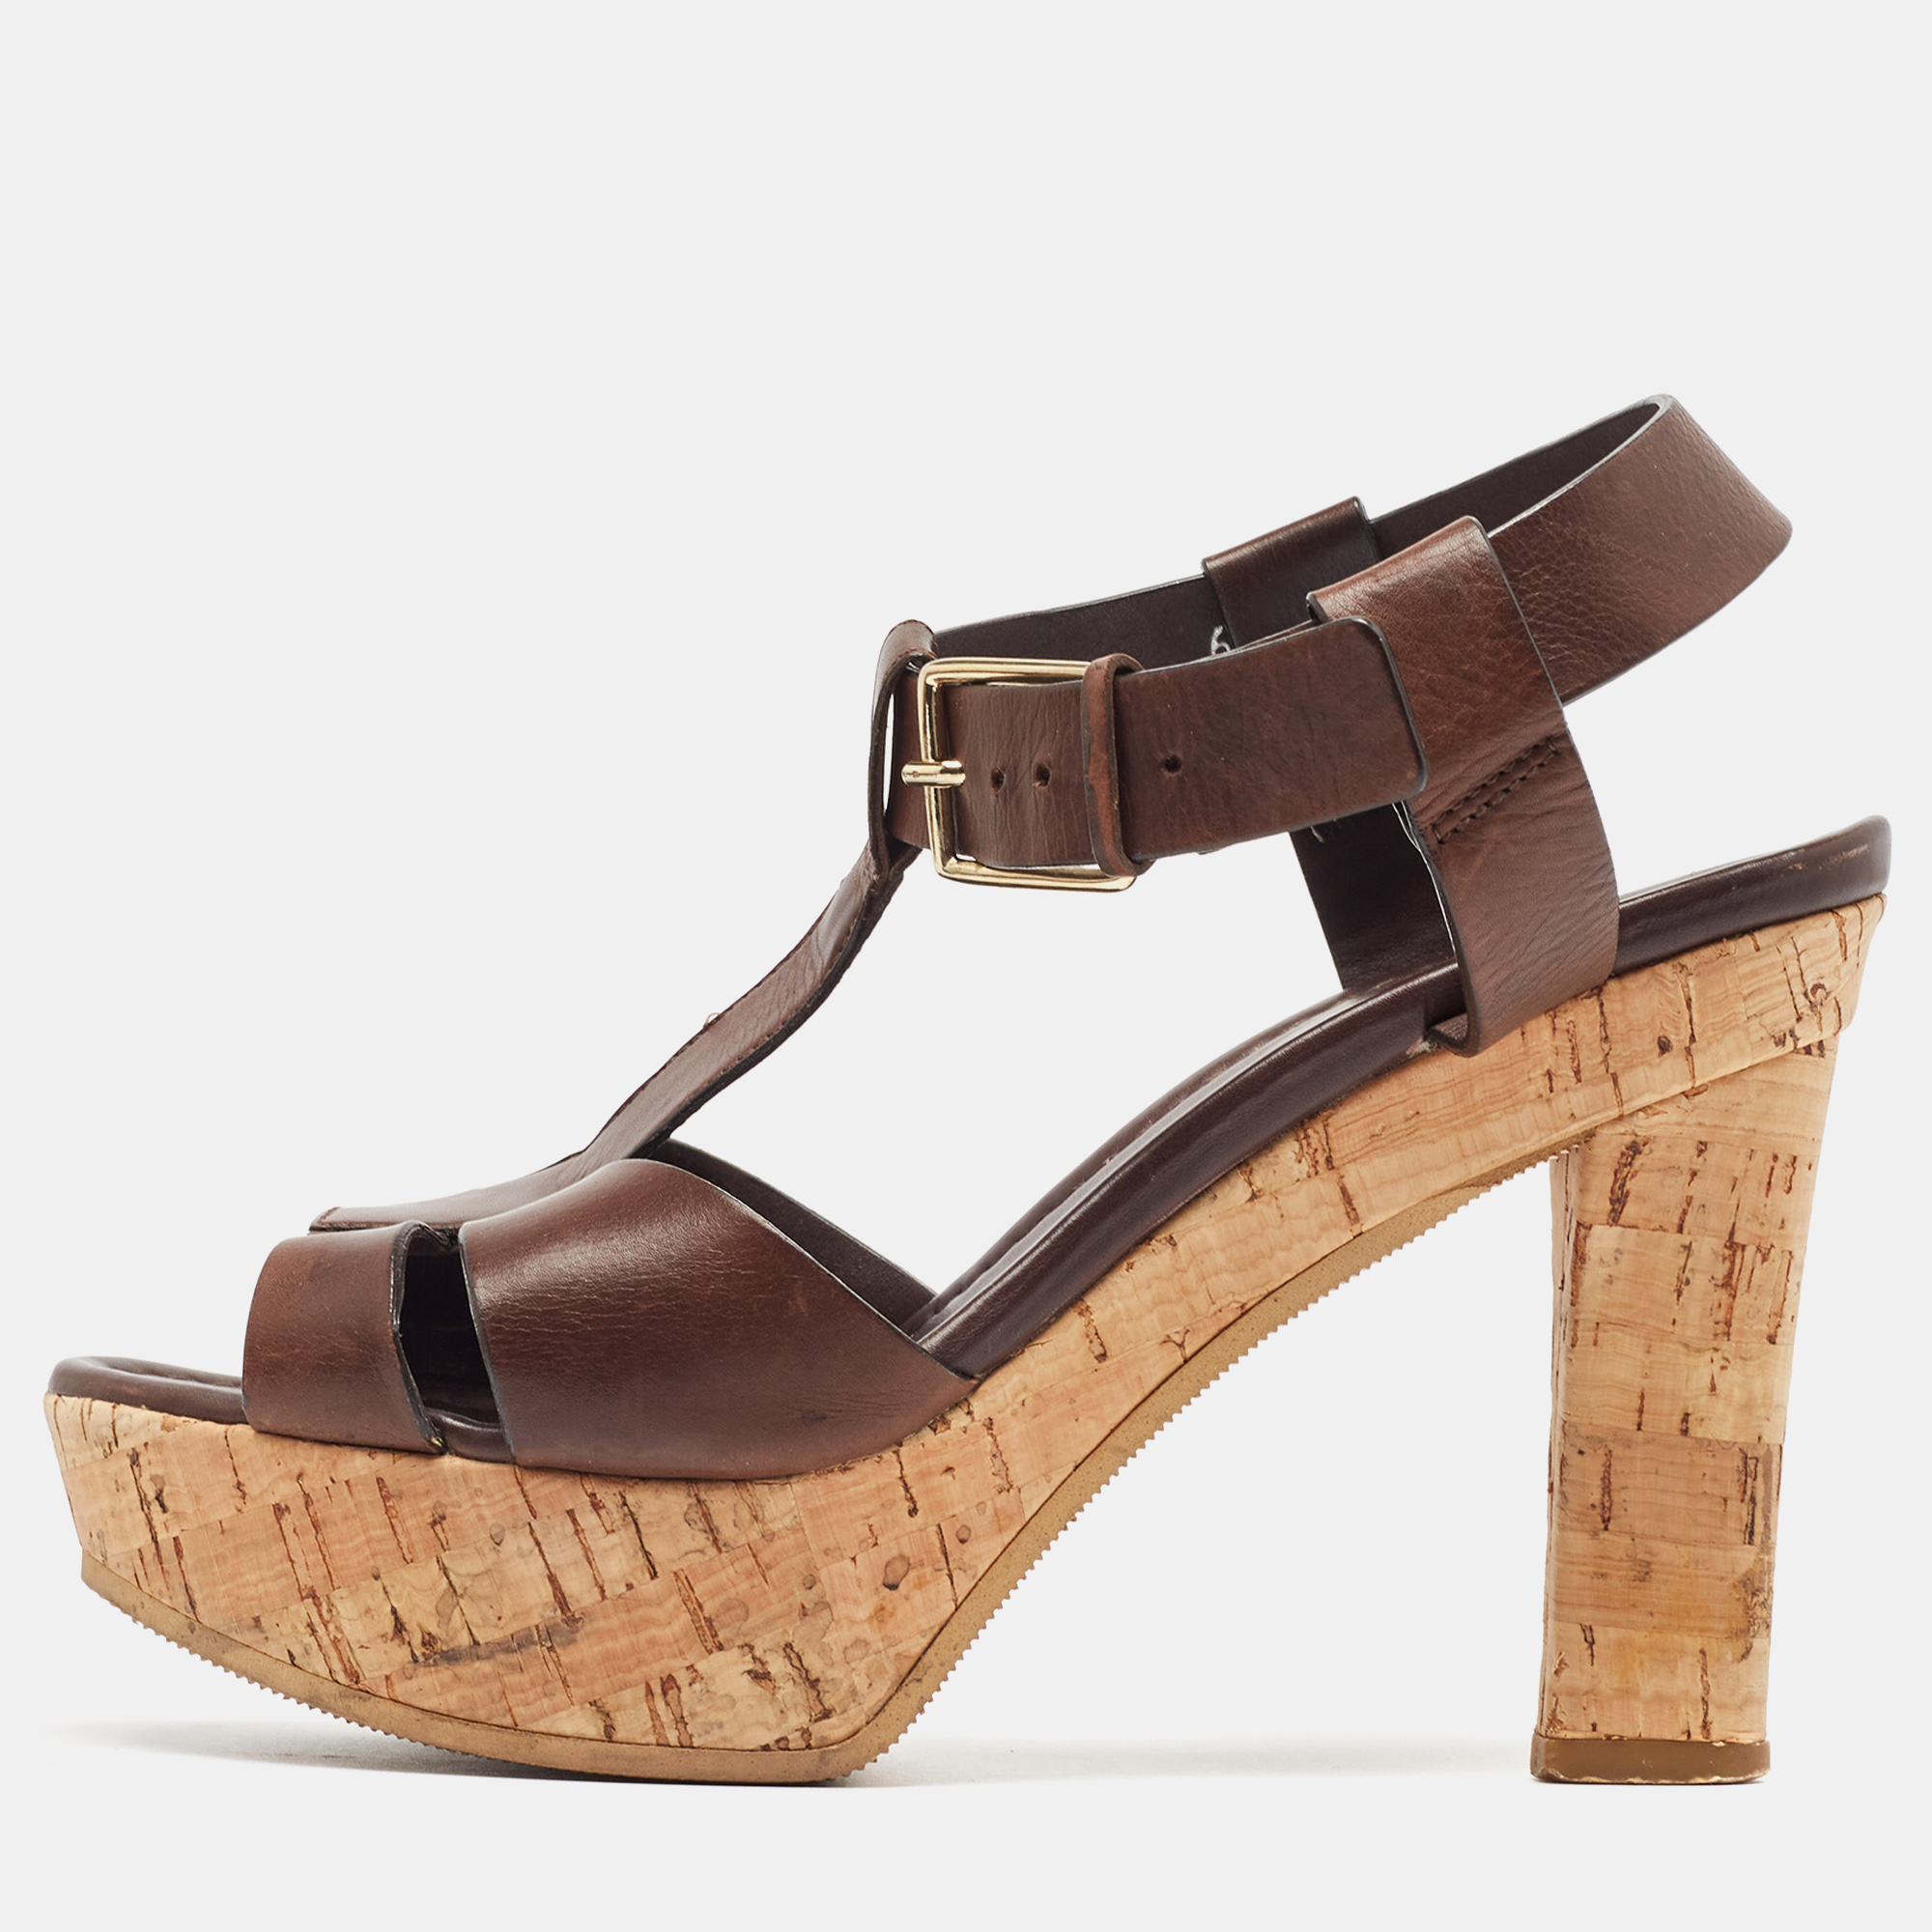 Santoni brown leather ankle strap platform sandals size 37